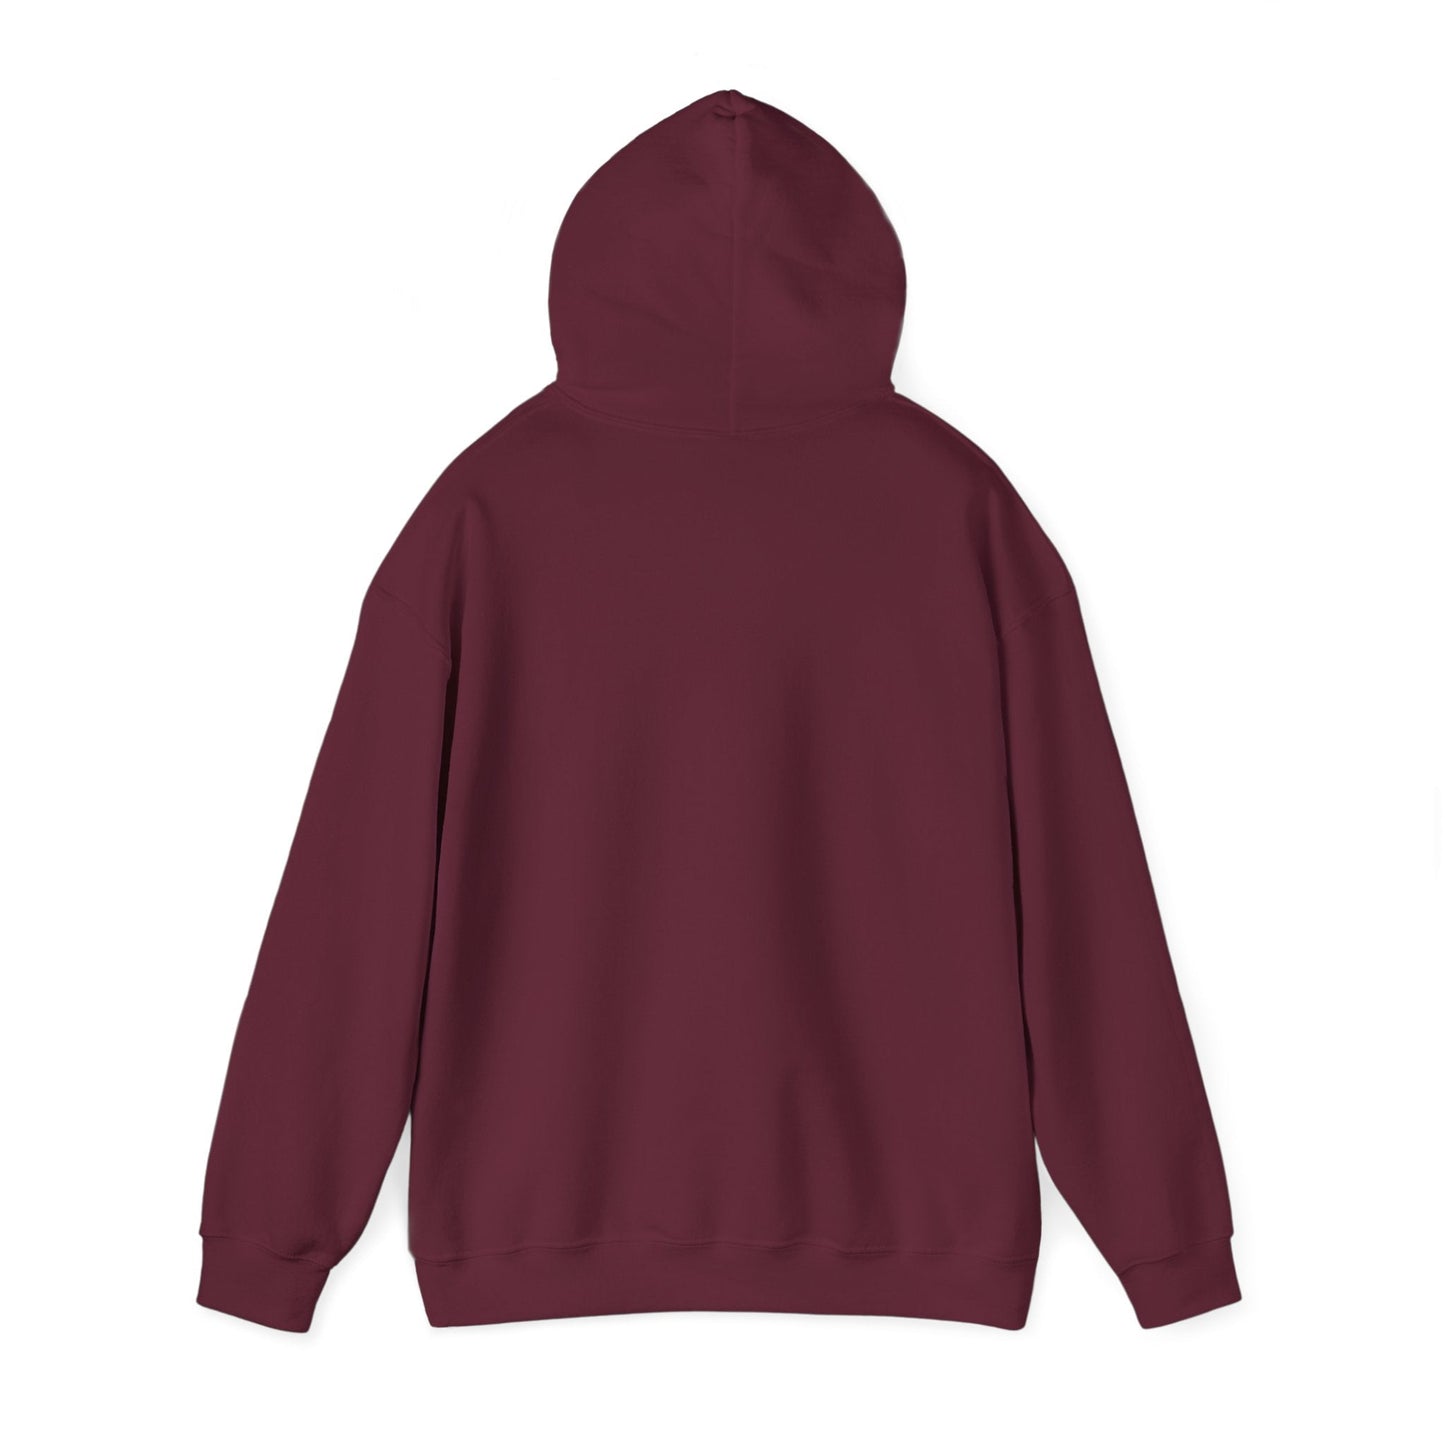 NEVER Trust A FART AFTER 50! Unisex Heavy Blend™ Gildan Hooded Sweatshirt 50/50 Cotton/Polyester Sizes S-5XL - Lizard Vigilante